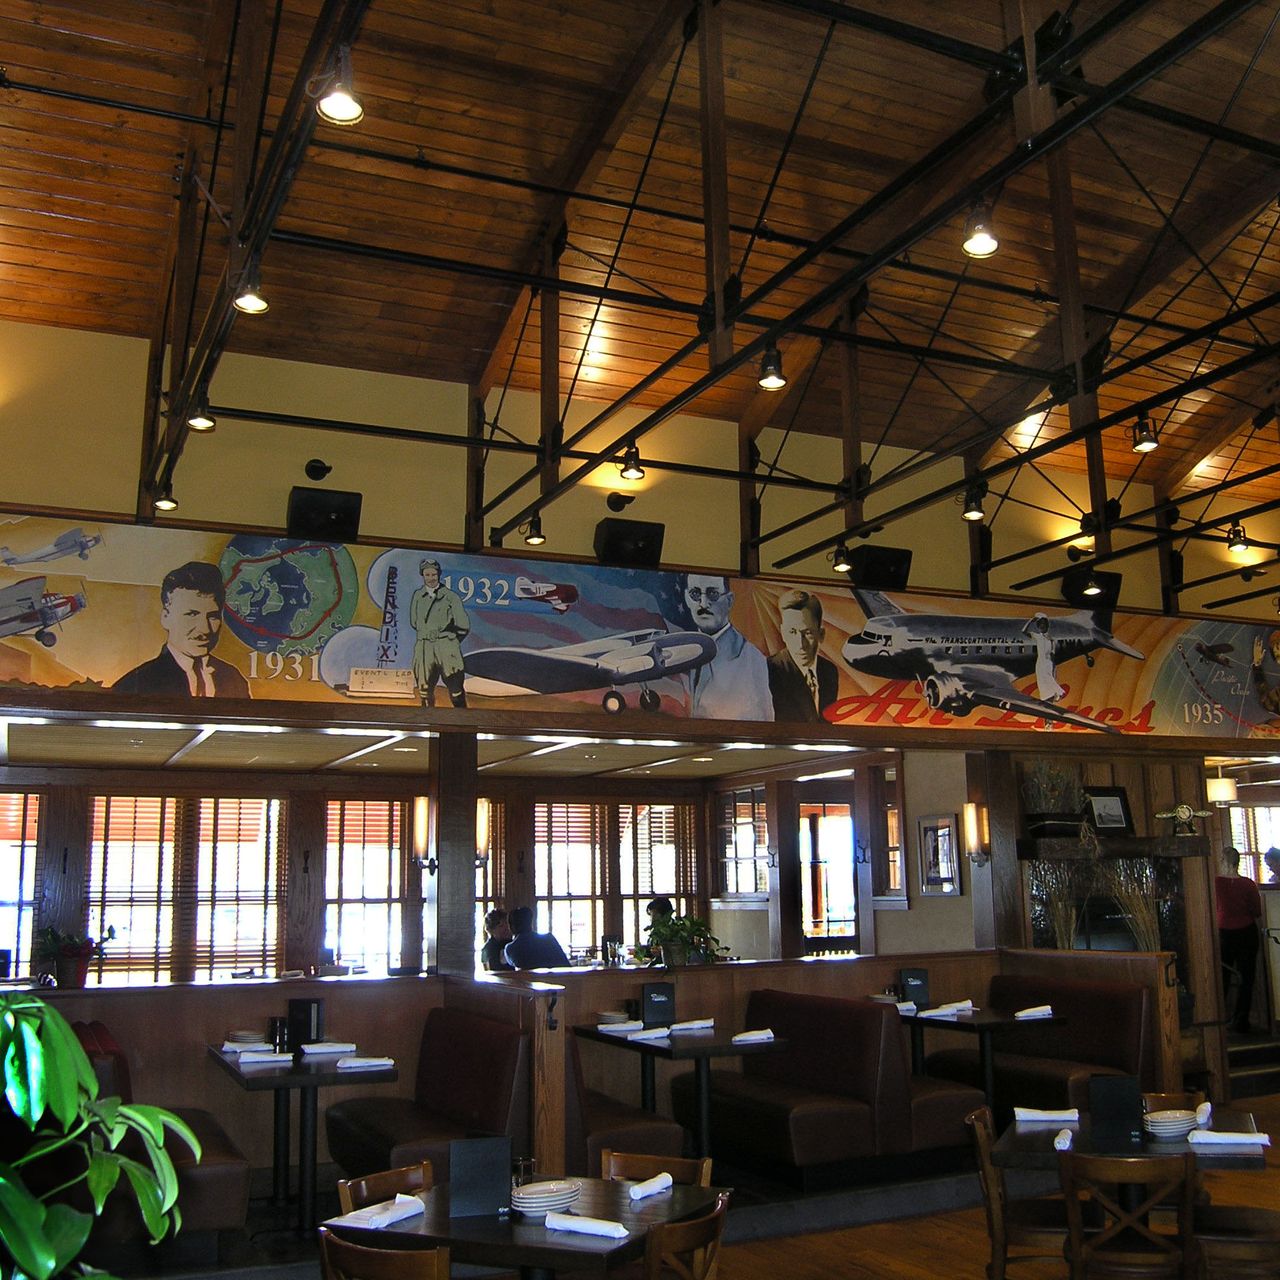 Doolittles Woodfire Grill - Fargo Restaurant - Fargo, ND